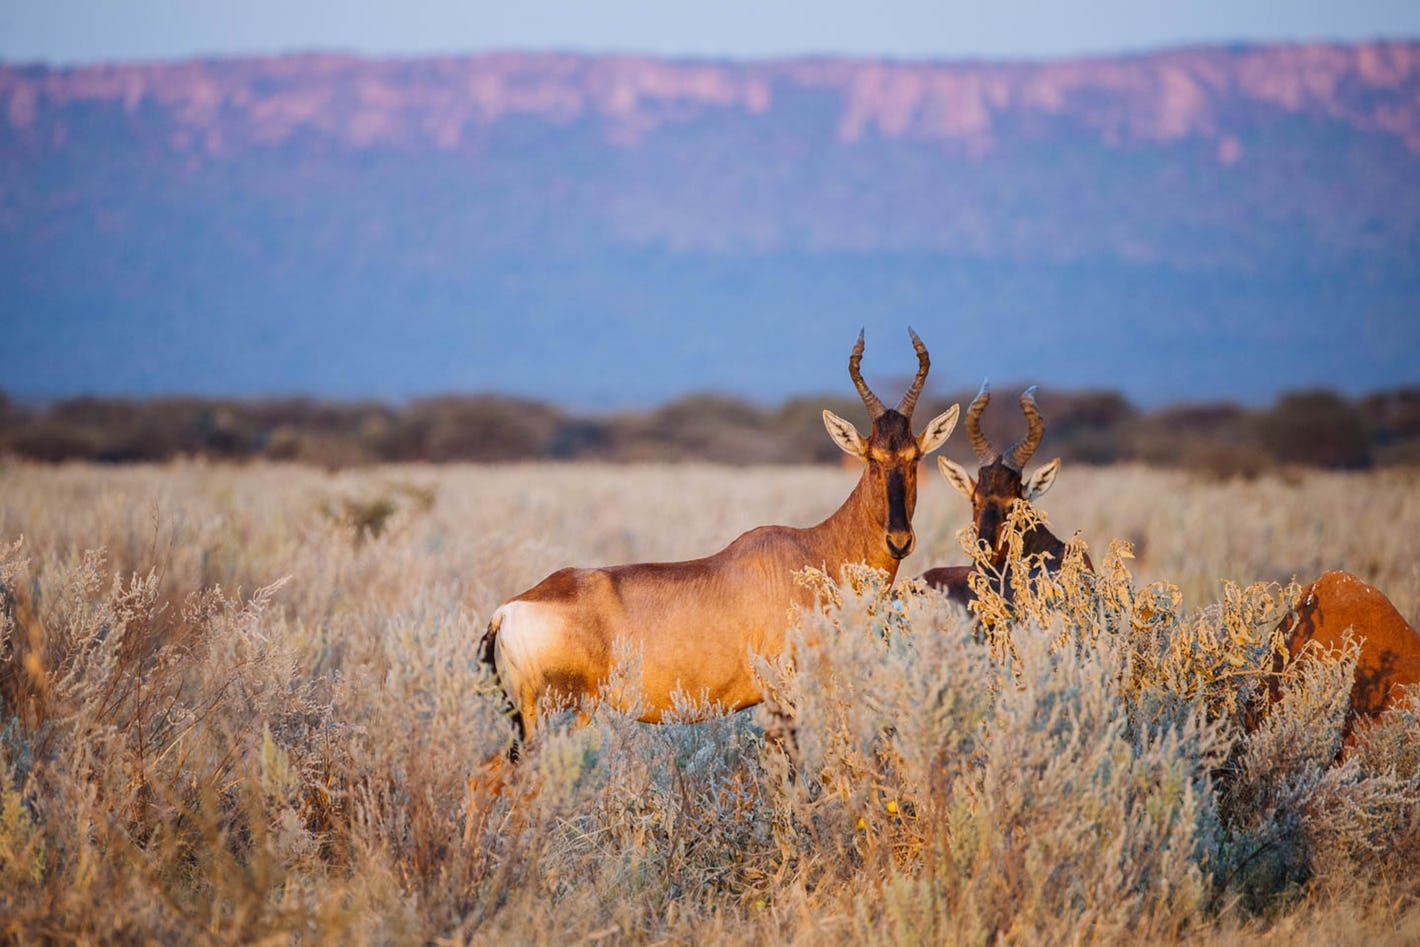 NamidRand Reserve, Namibia